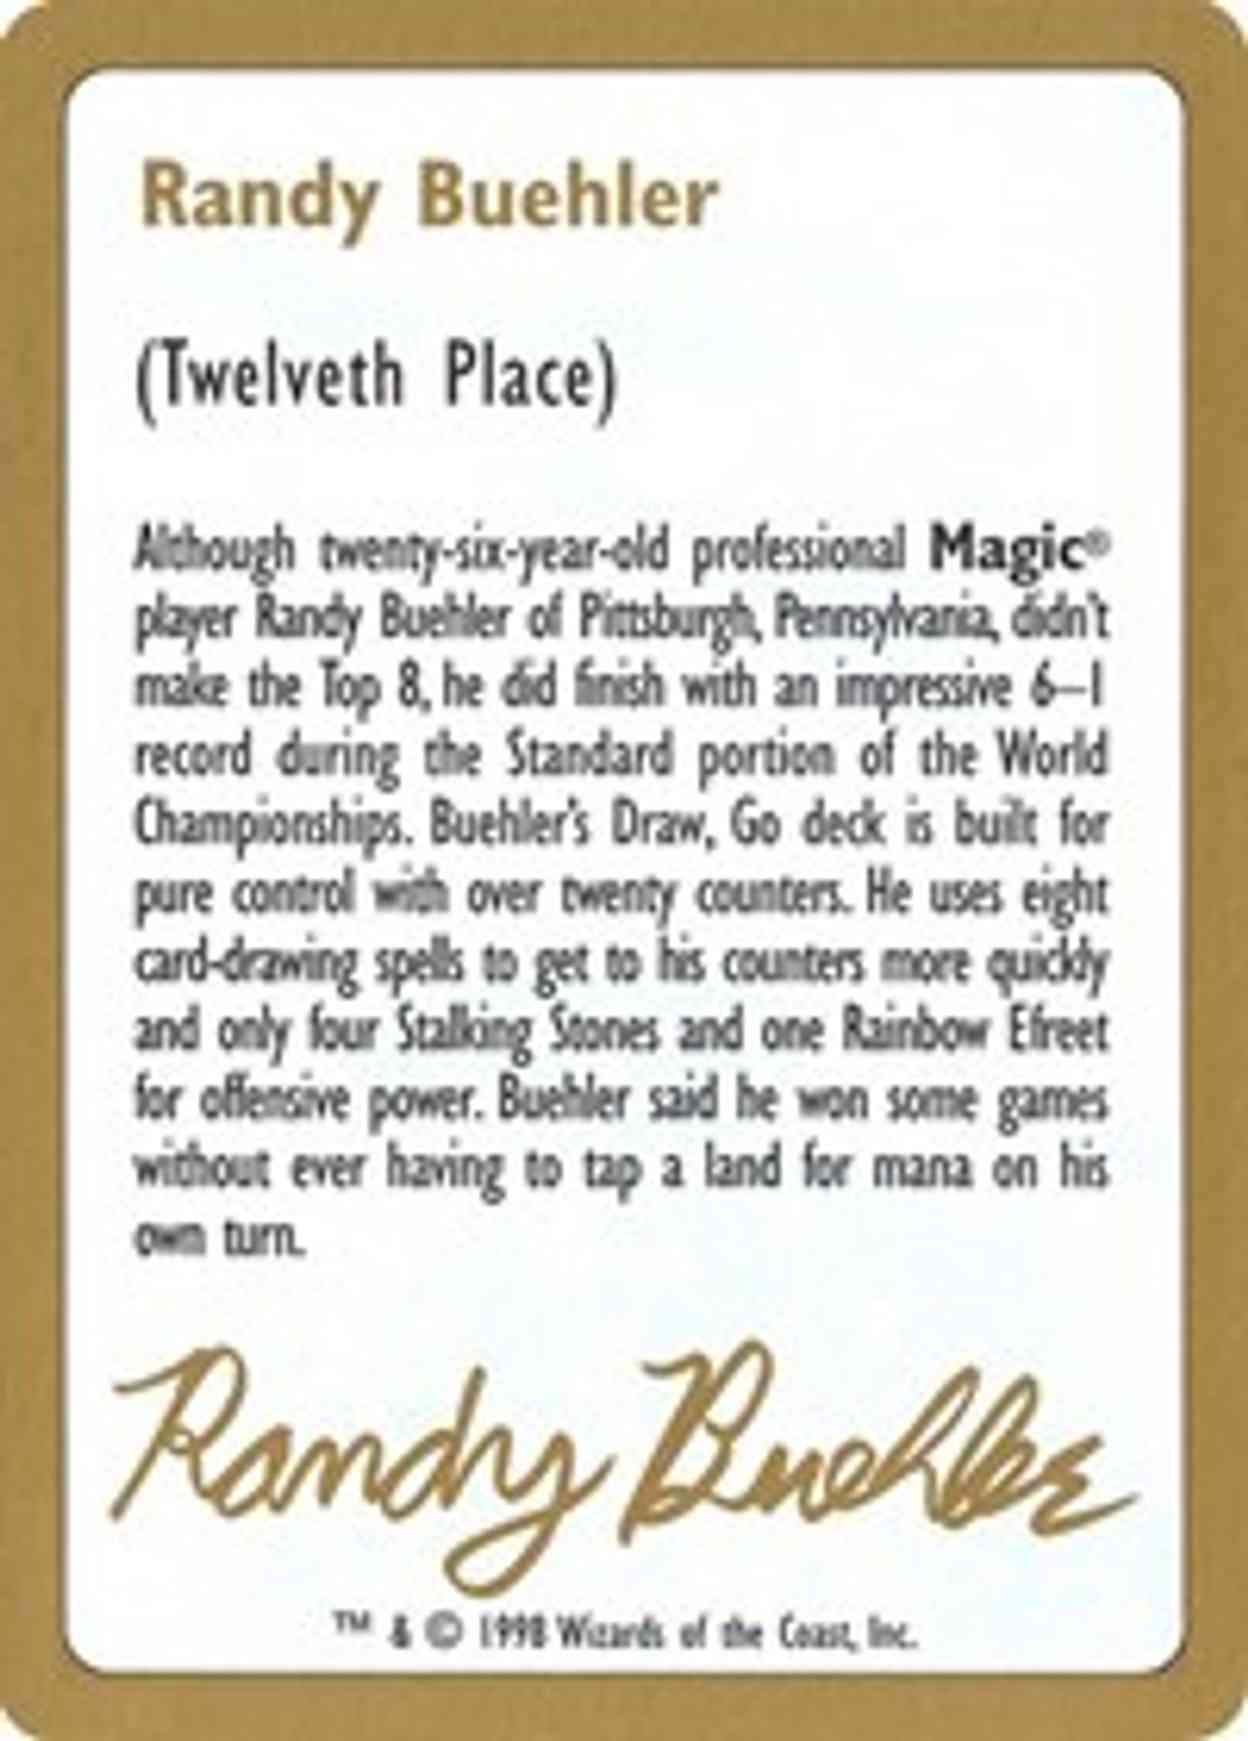 1998 Randy Buehler Biography Card magic card front